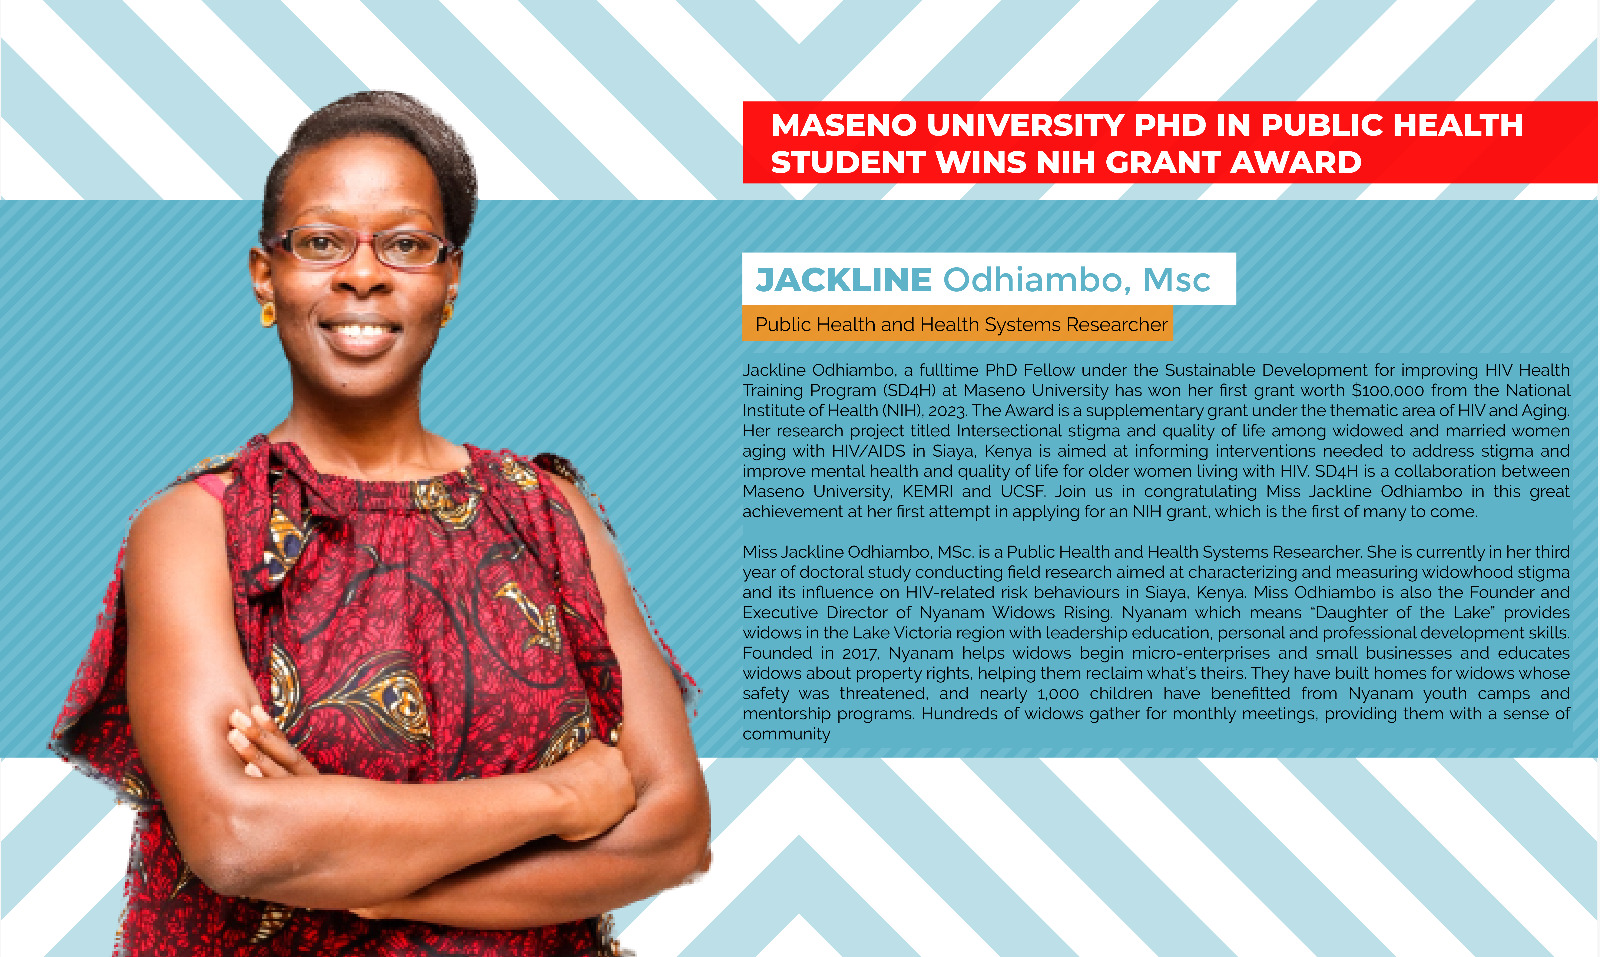 Maseno University Phd in Public Health Student Wins NIH Grant Award